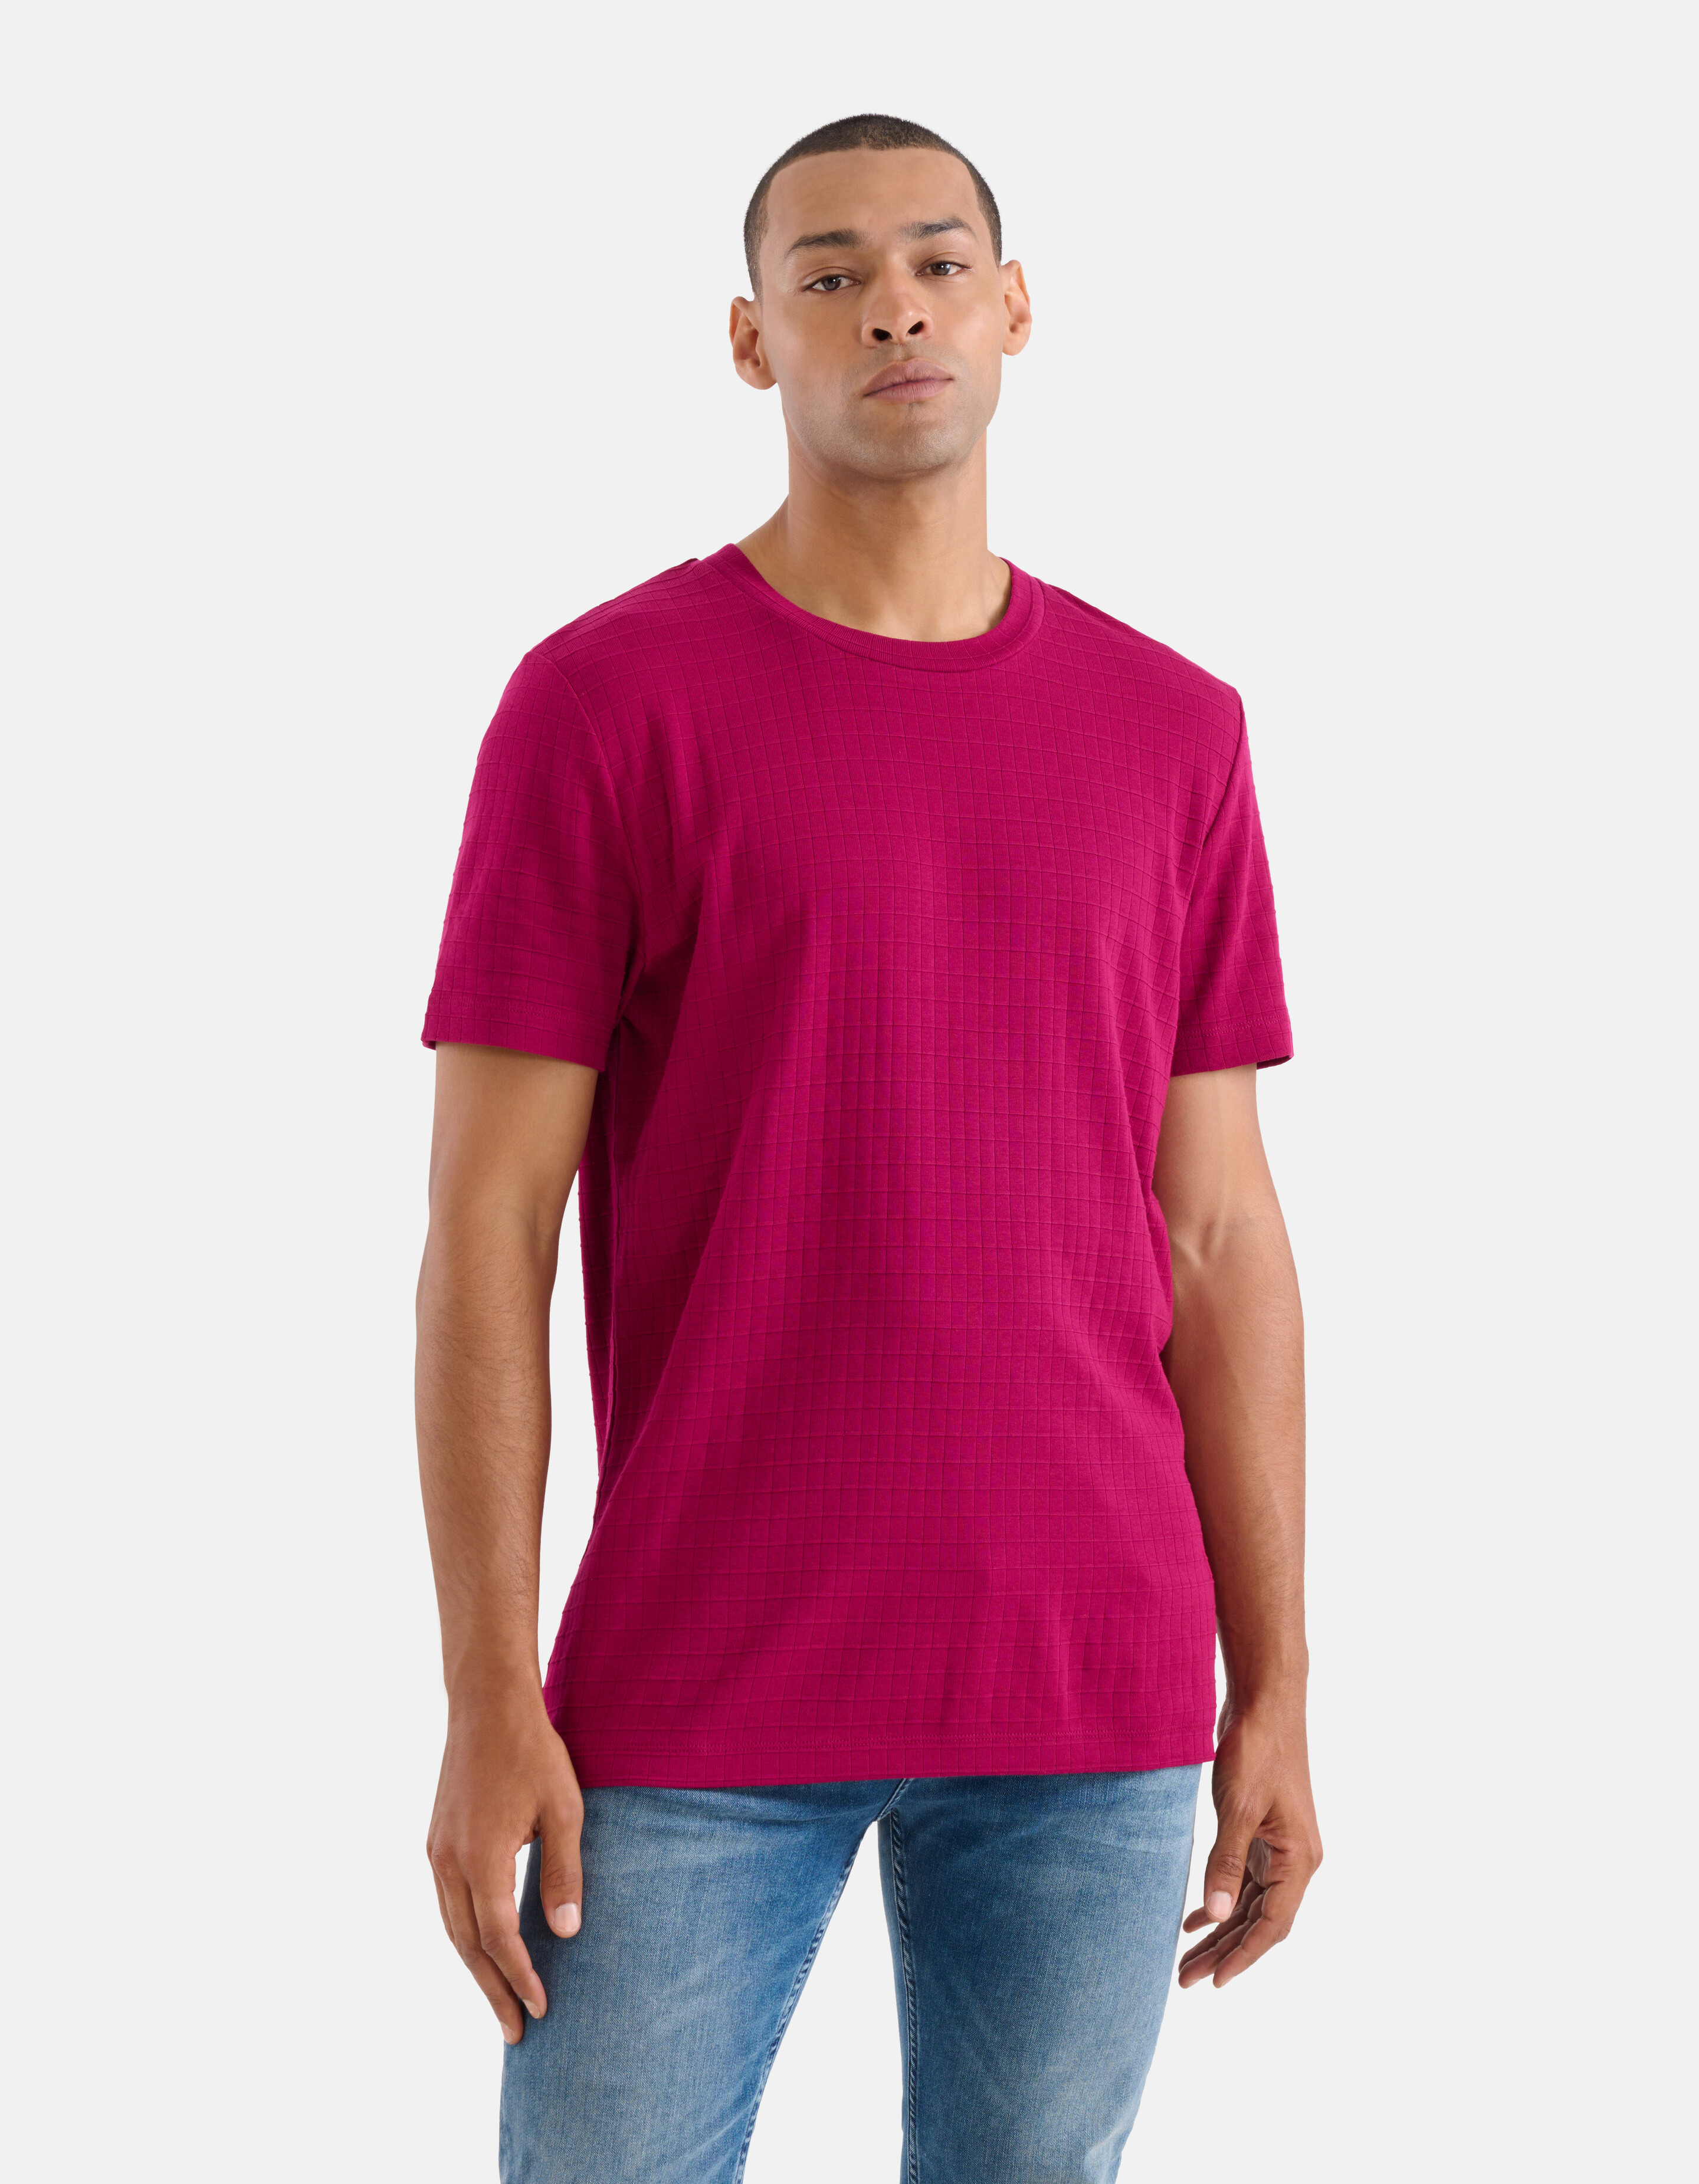 Struktur-T-Shirt Fuchsia SHOEBY MEN